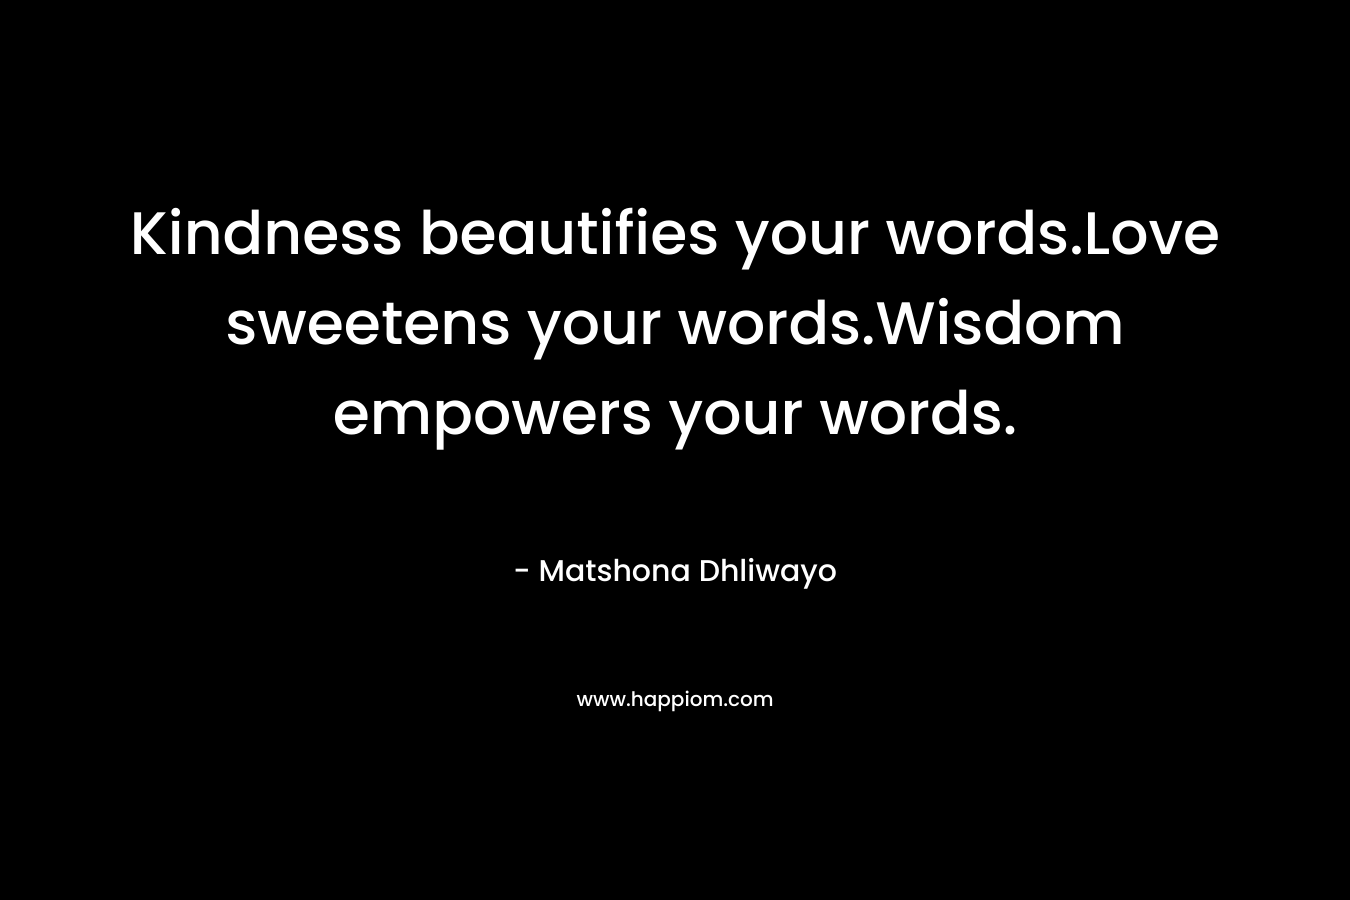 Kindness beautifies your words.Love sweetens your words.Wisdom empowers your words.